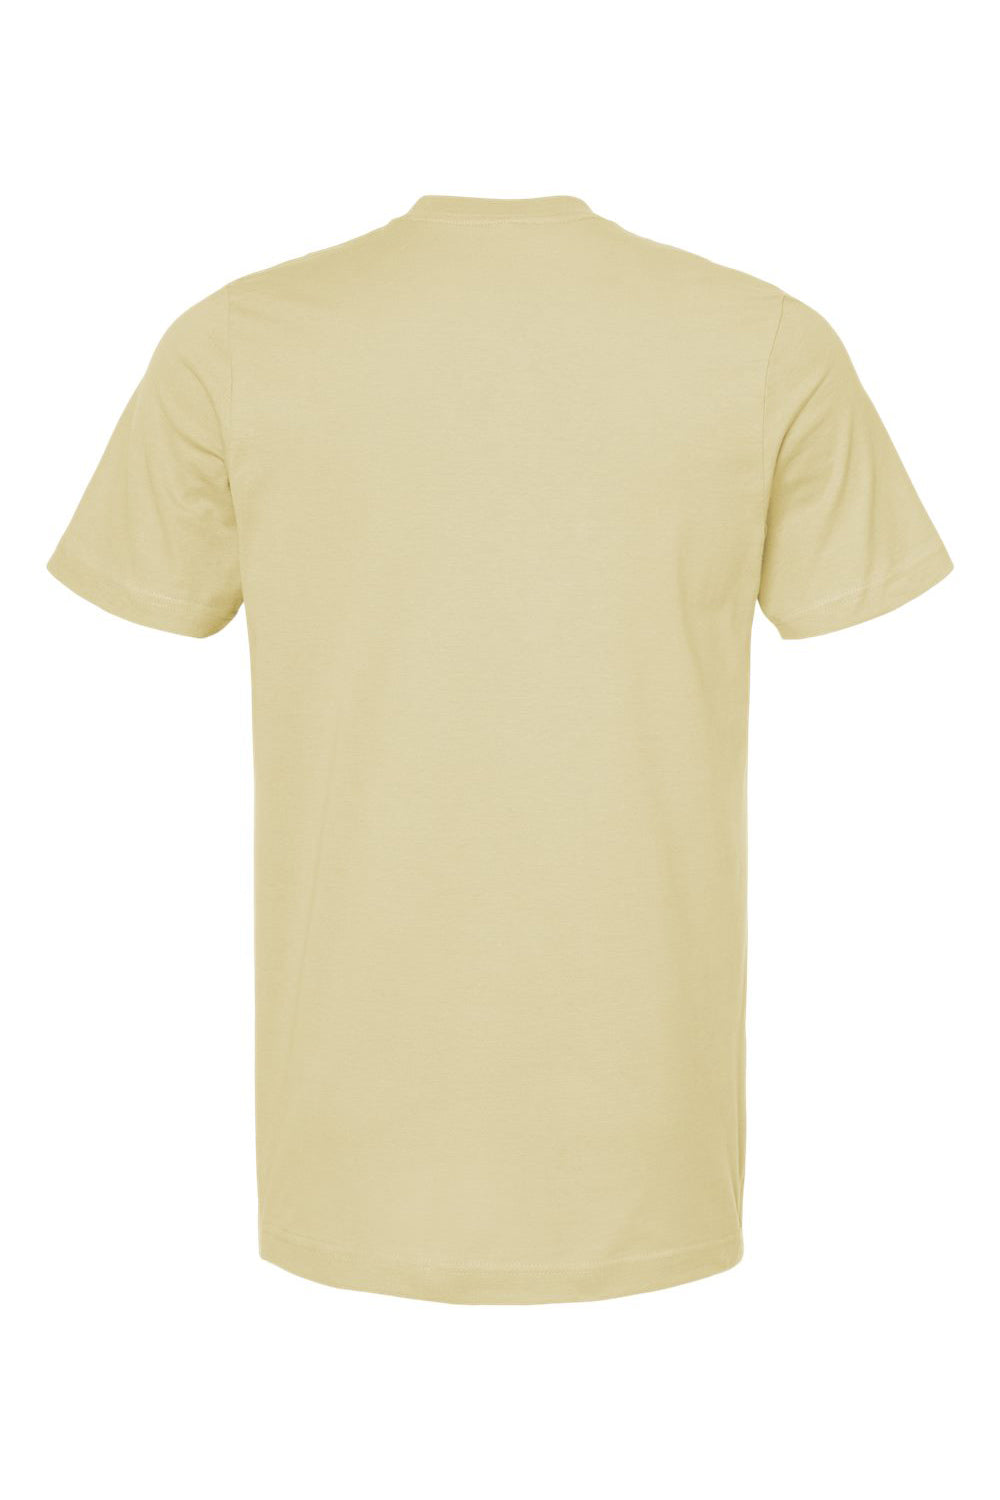 Tultex 602 Mens Short Sleeve Crewneck T-Shirt Cream Flat Back